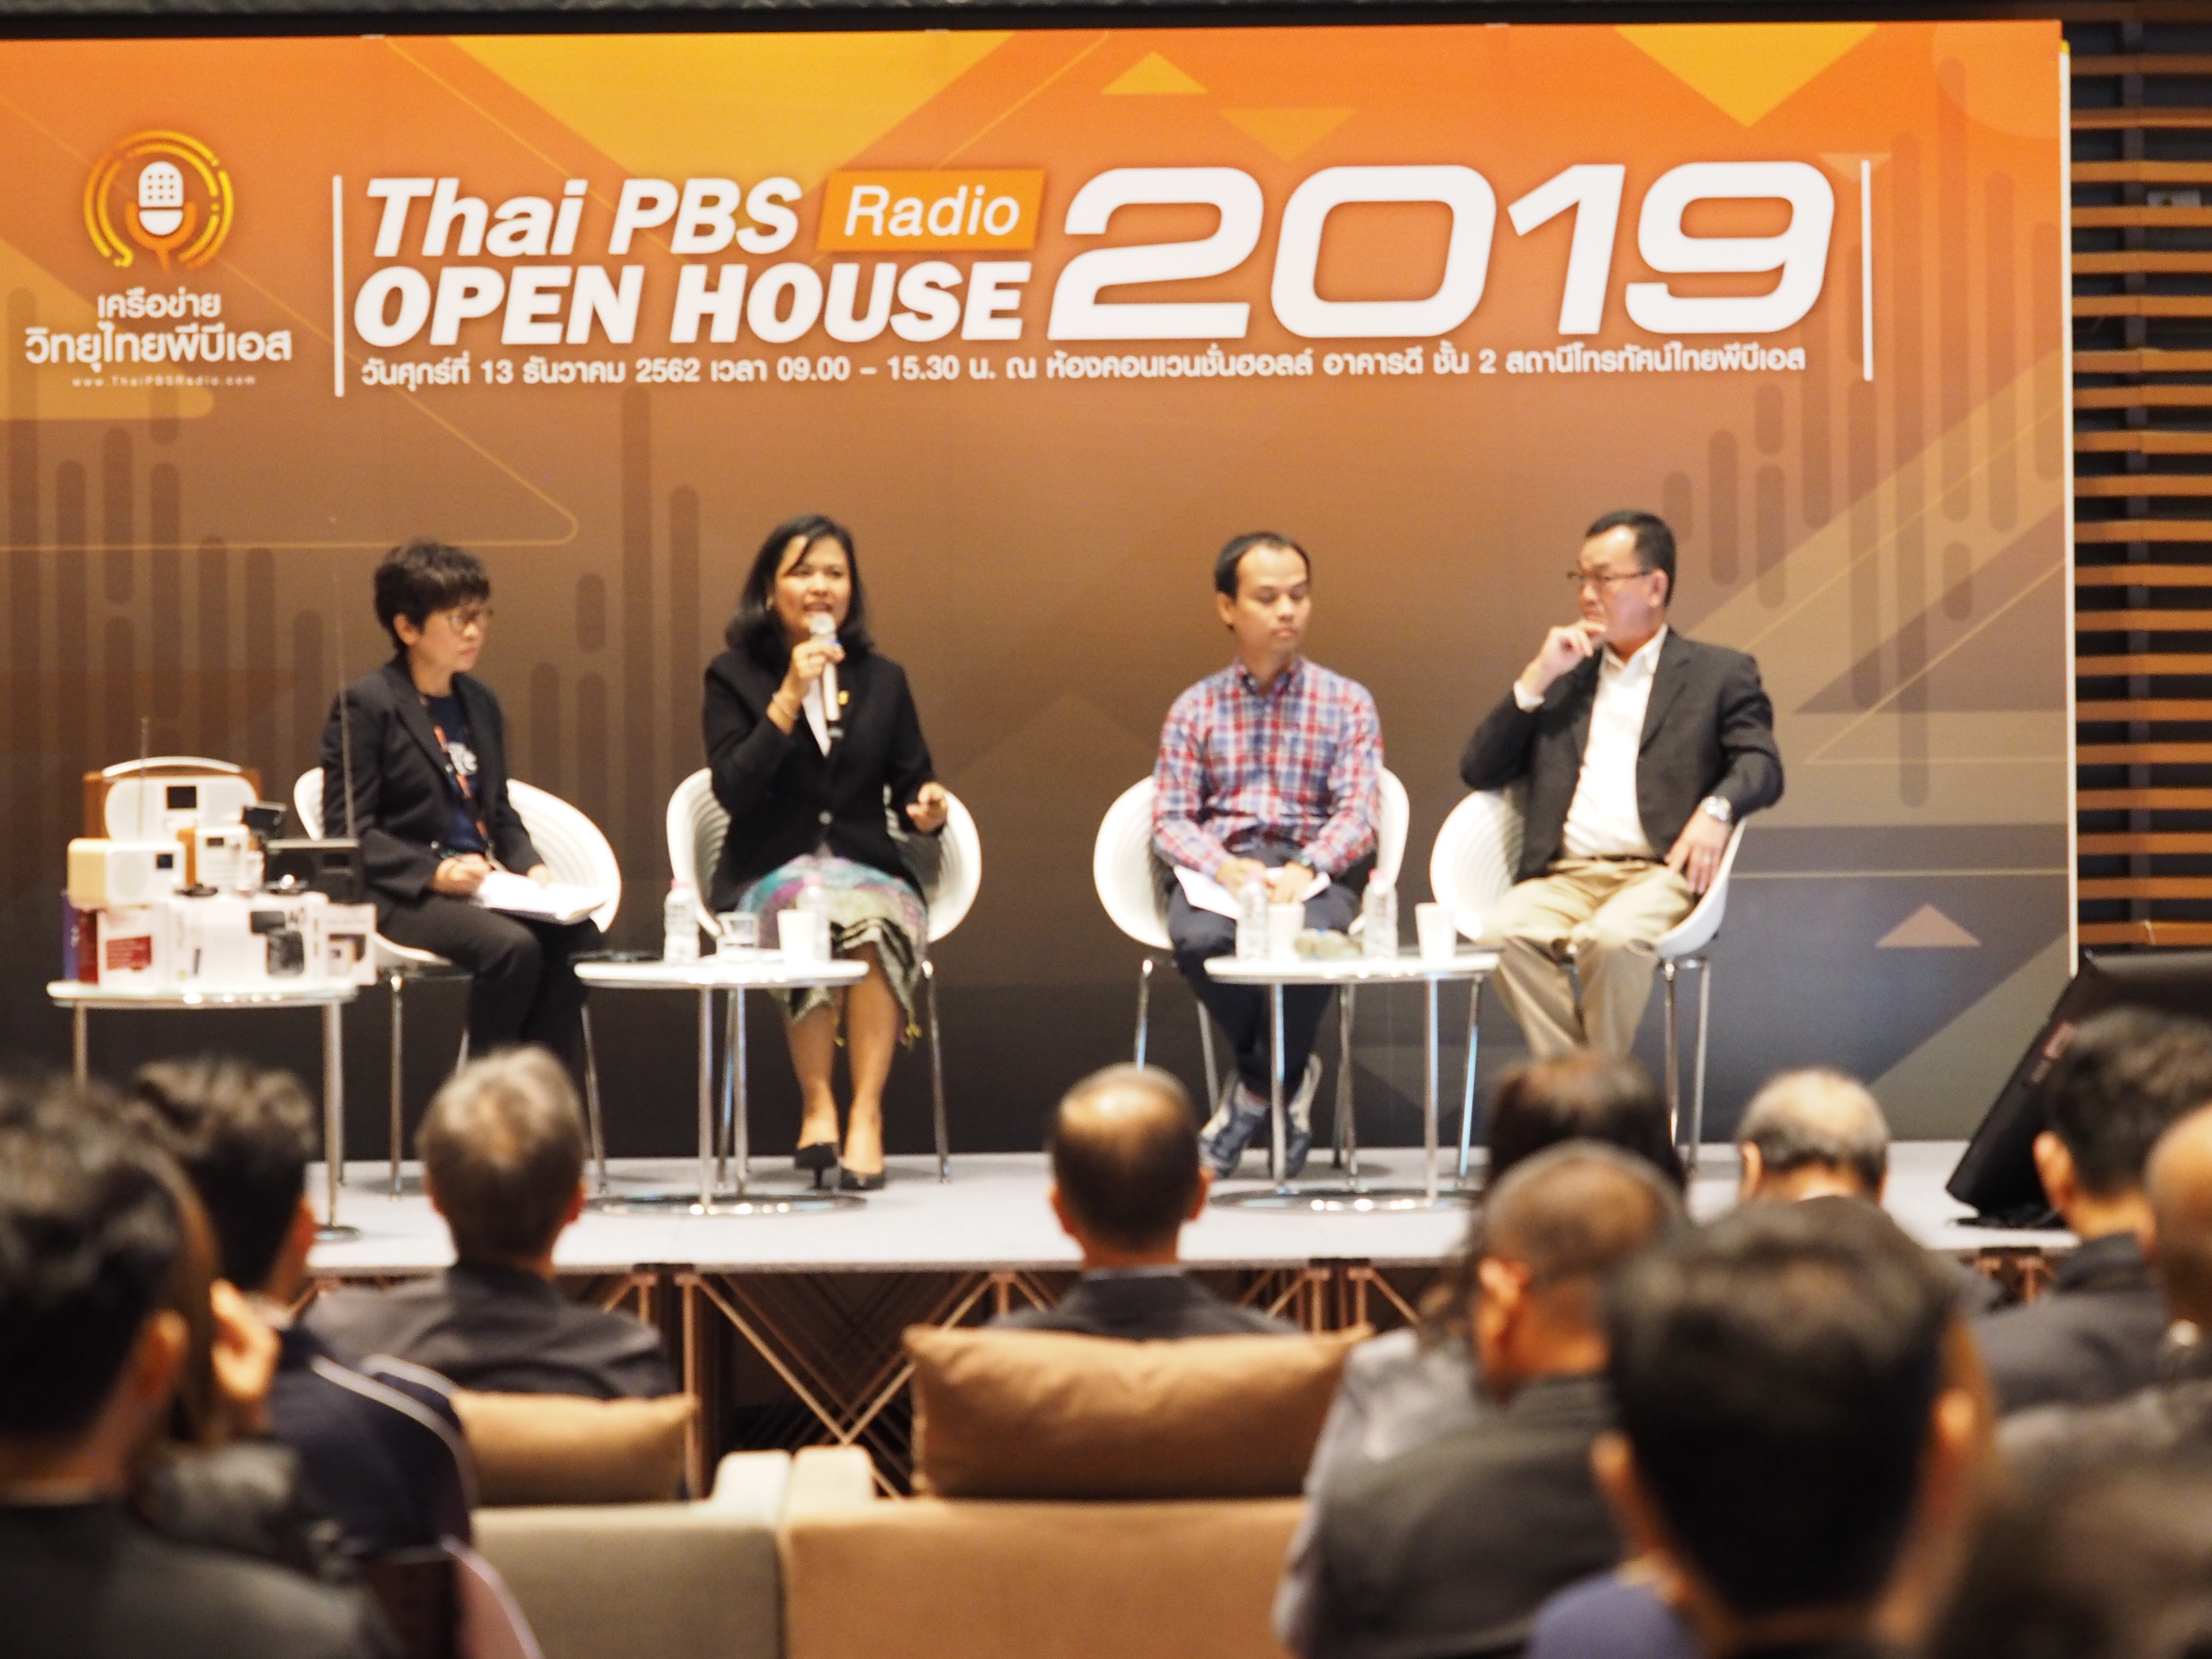 ThaiPBS Radio Open House 2019 เปิดบ้านไทยพีบีเอส สื่อวิทยุบนความท้าทายของยุคคลื่นลูกที่สี่ Digital Transformation